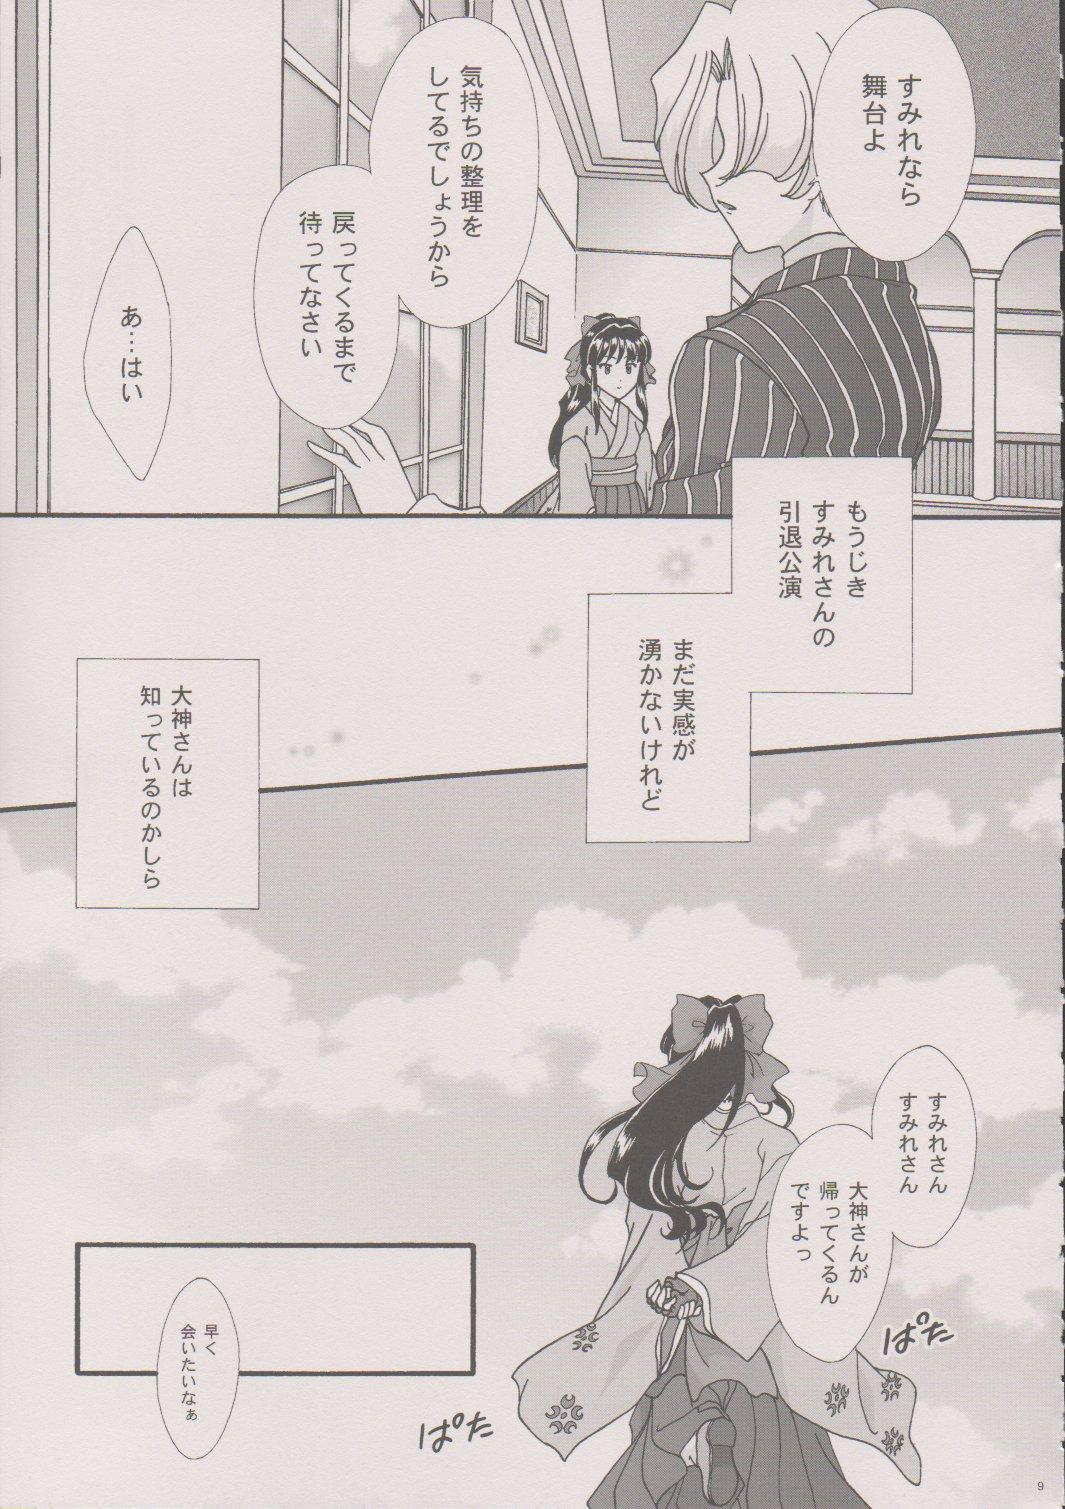 Gayhardcore [TSK (Fuuga Utsura)] Maihime ~Karen~ 6 Teito Yori. (Sakura Wars) - Sakura taisen Special Locations - Page 8